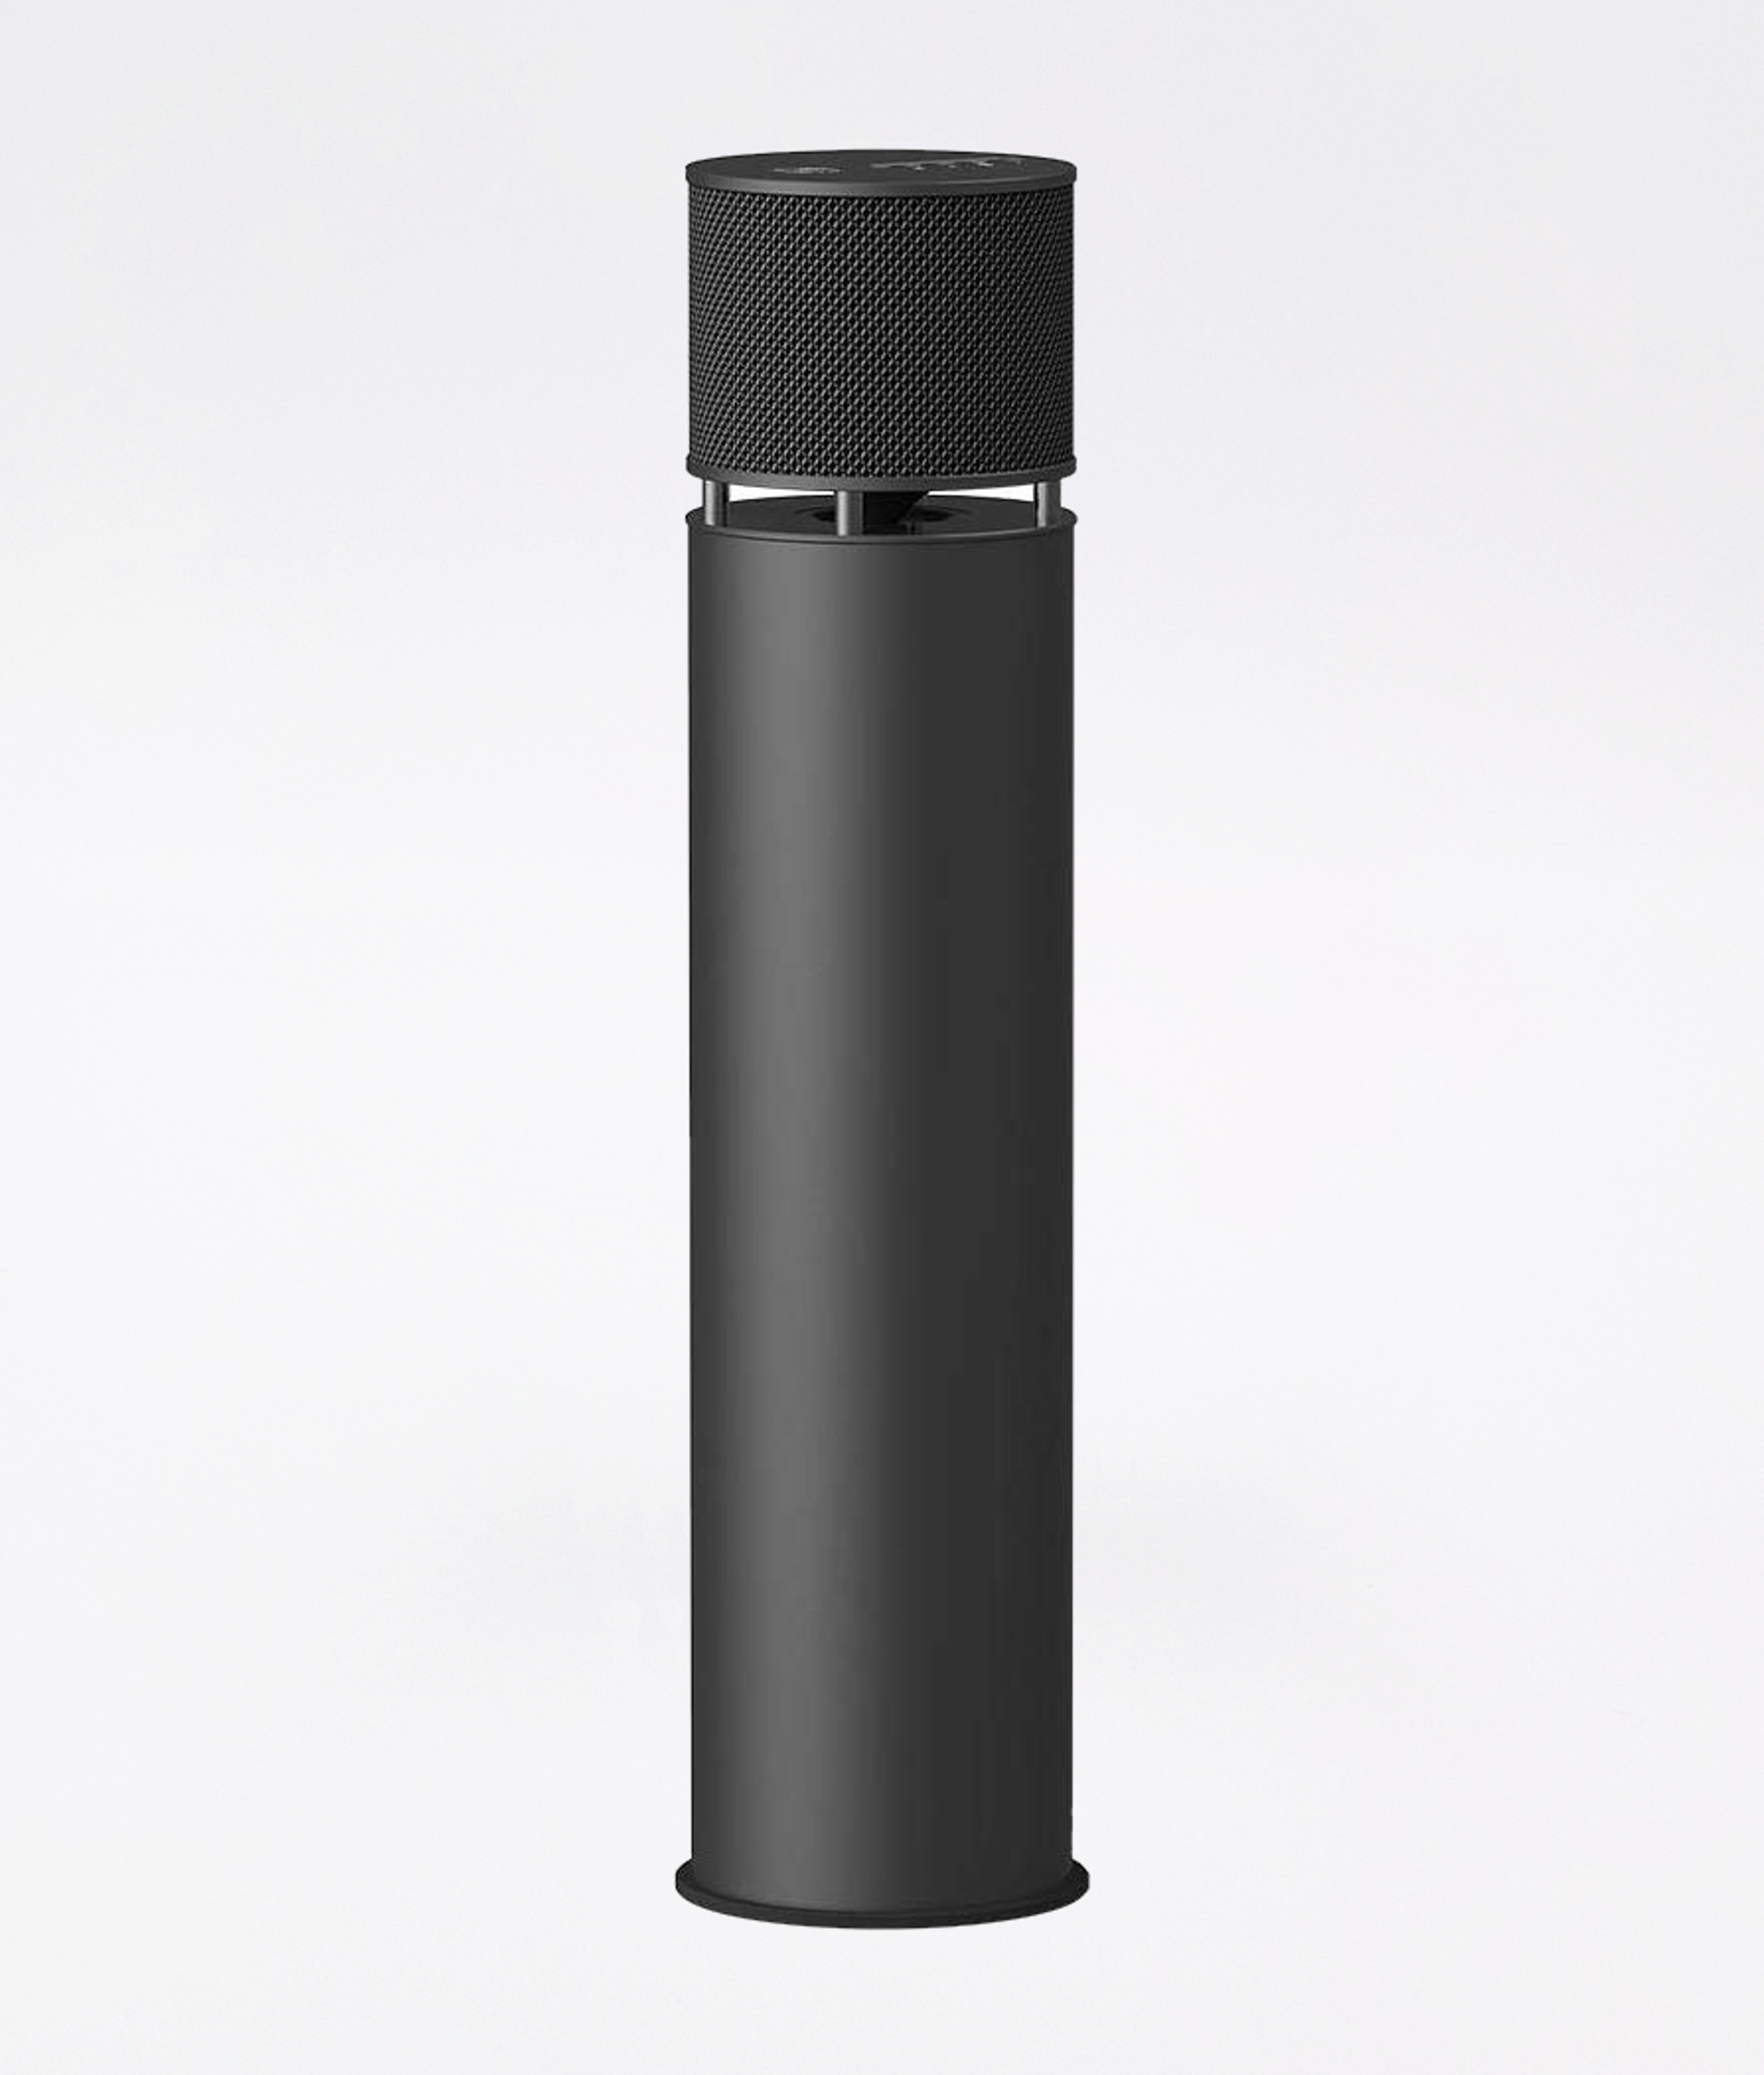 Abramtek E600 Wireless Speaker with Super Bass Subwoofer and 360